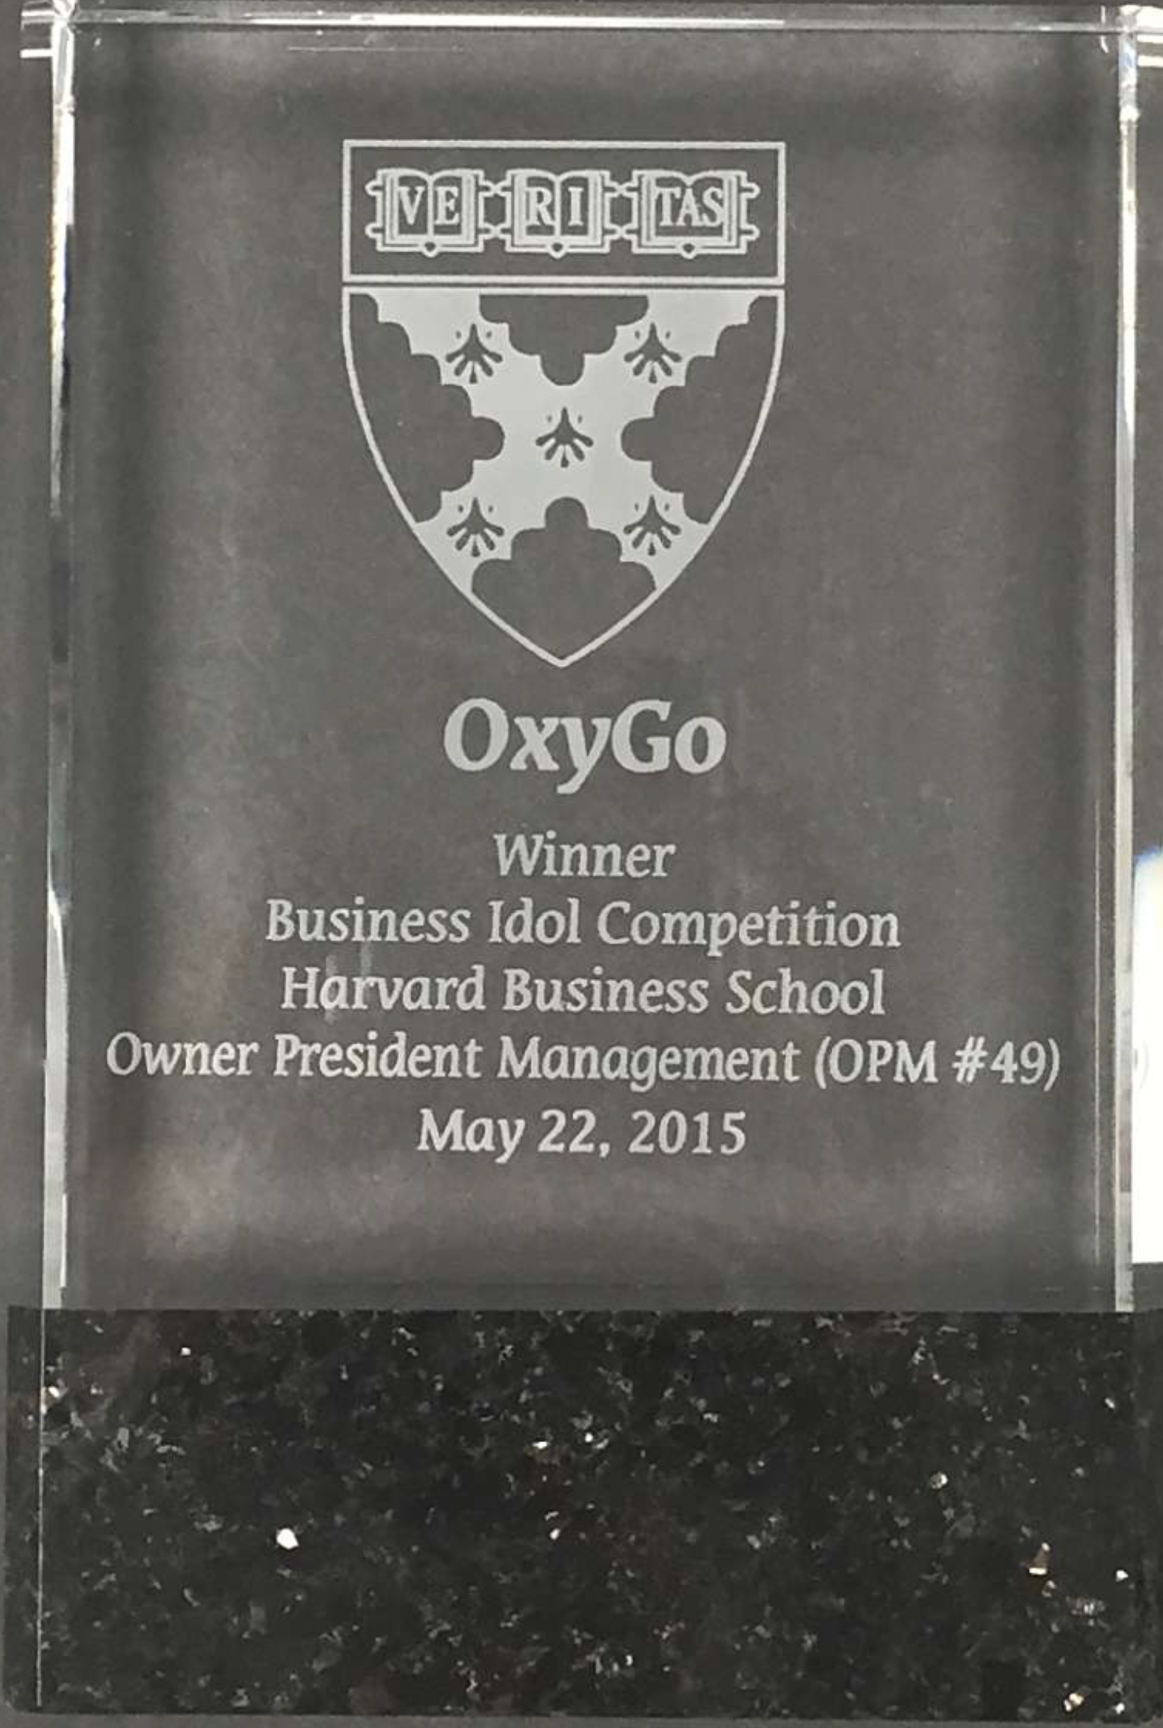 OXYGO PORTABLE OXYGEN CONCENTRATOR WINS HARVARD BUSINESS SCHOOL AWARD